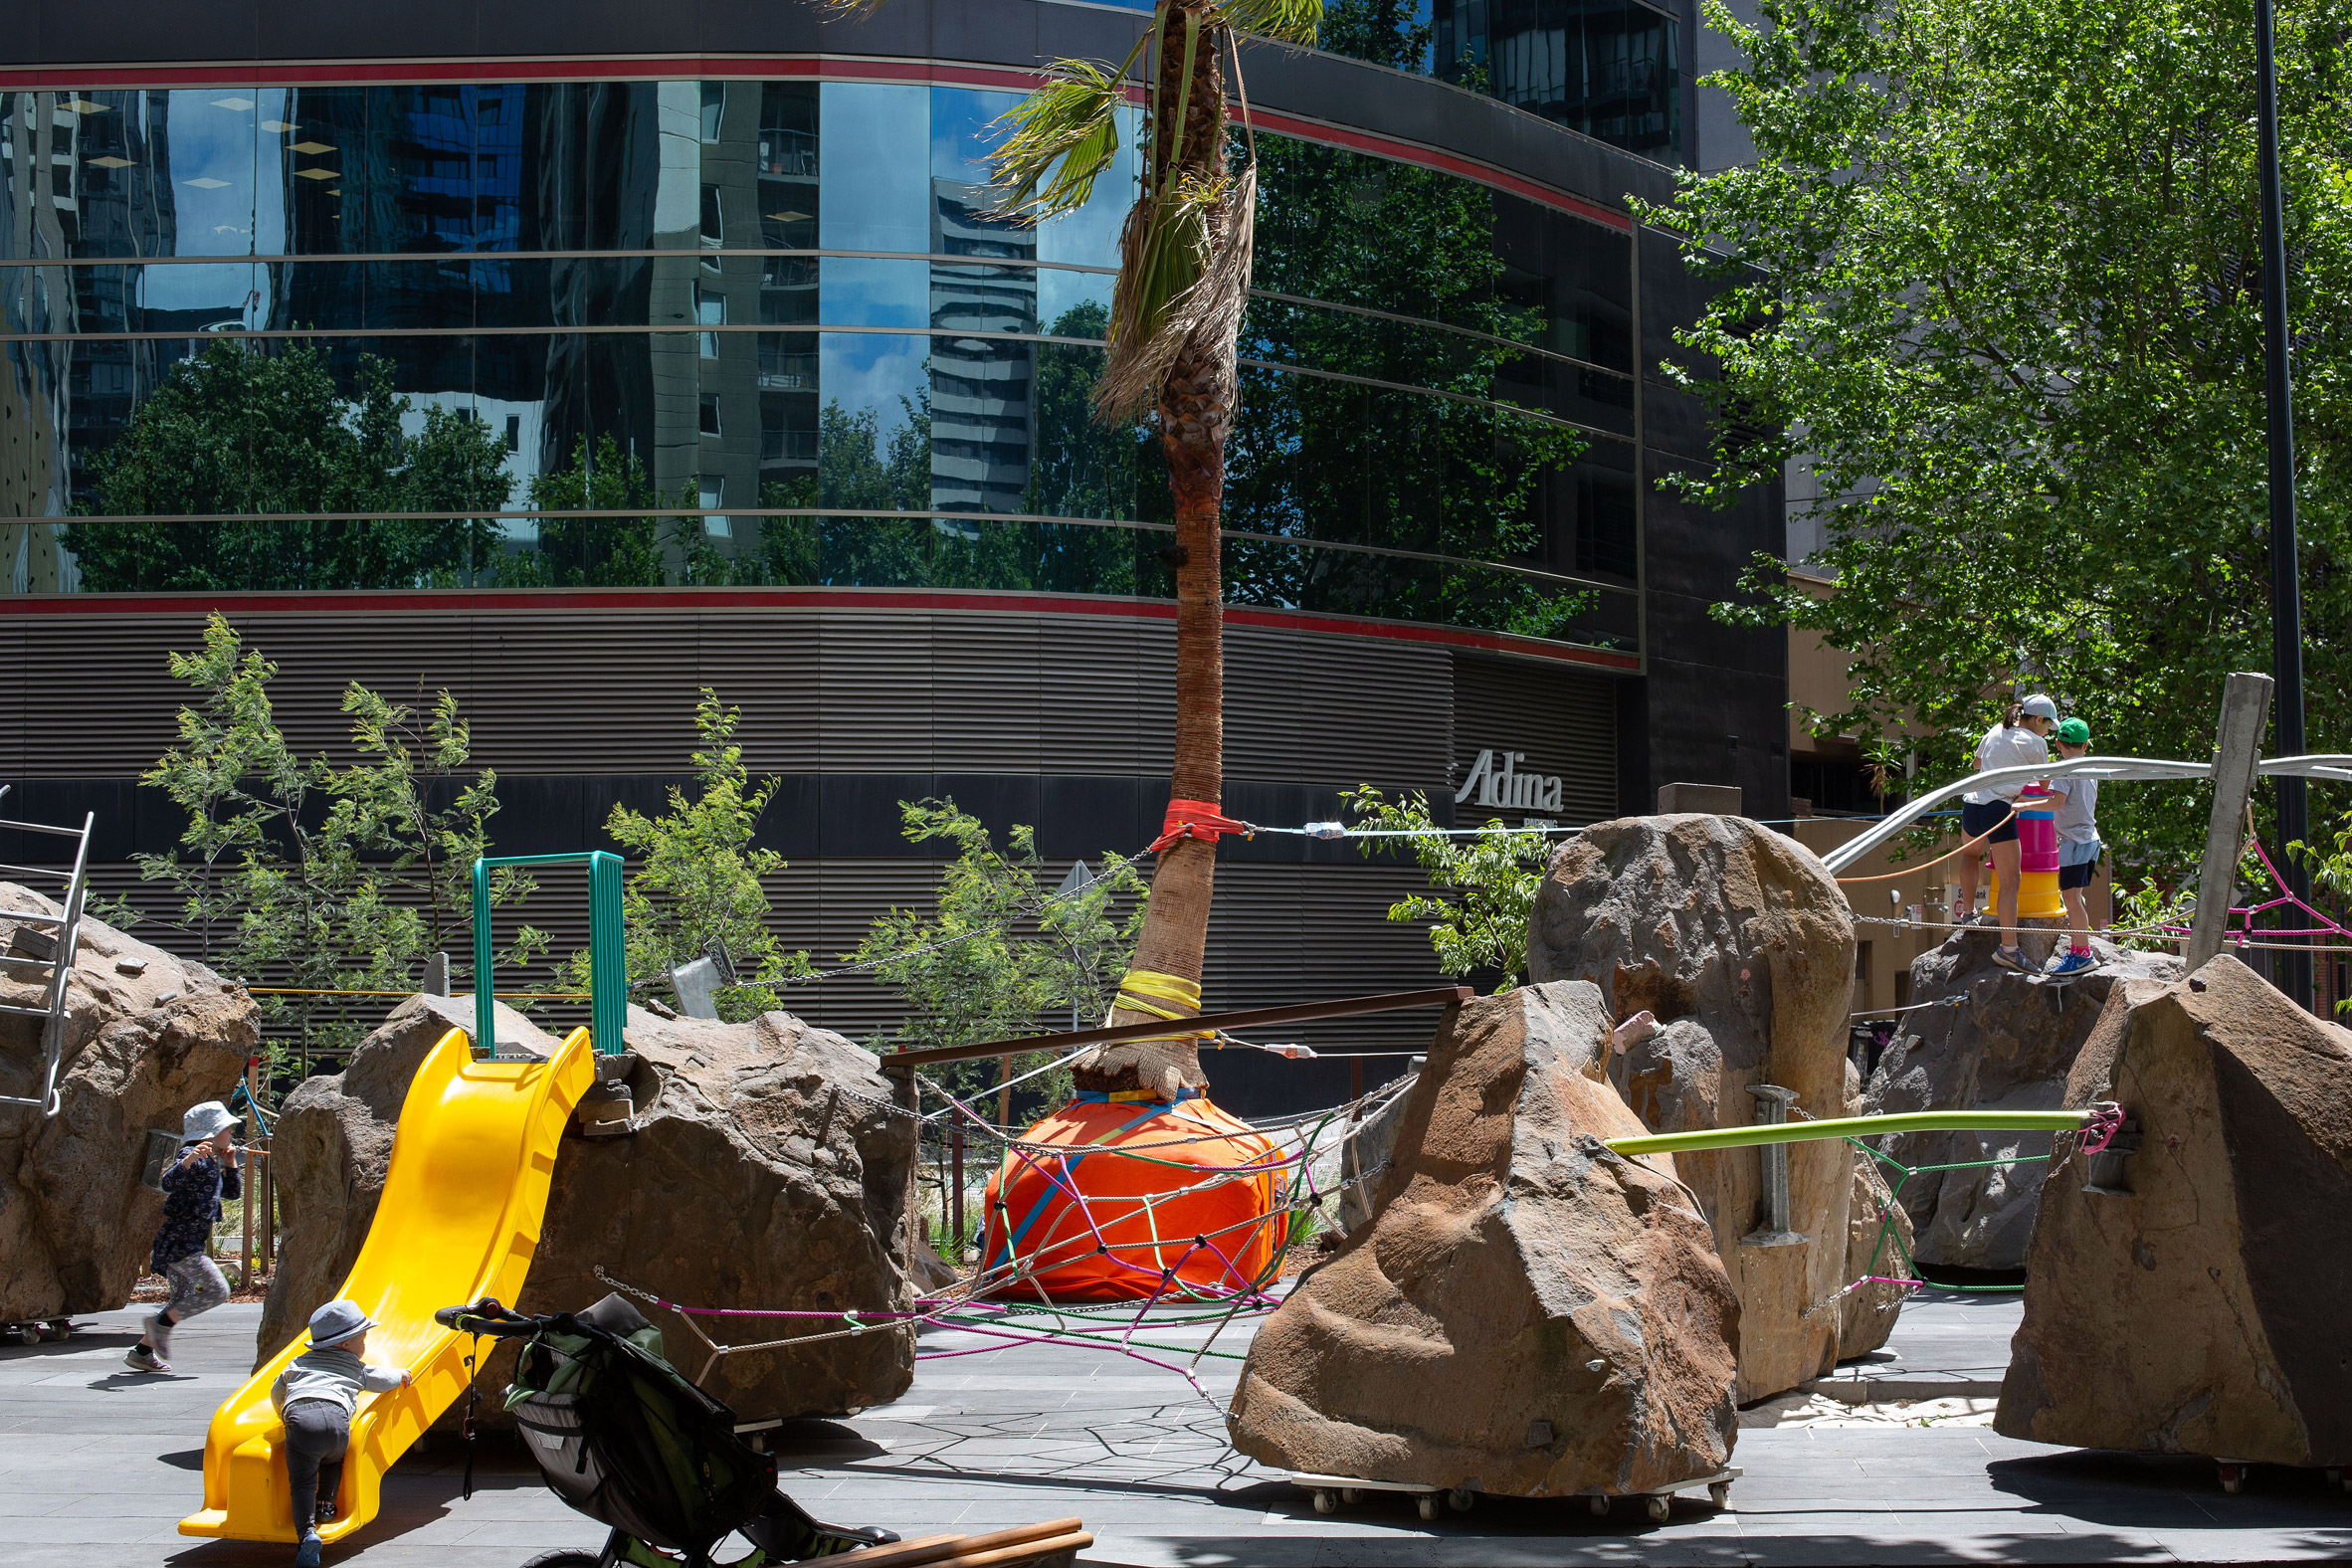 Mike Hewson's Rocks on Wheels playground sculpture in Melbourne